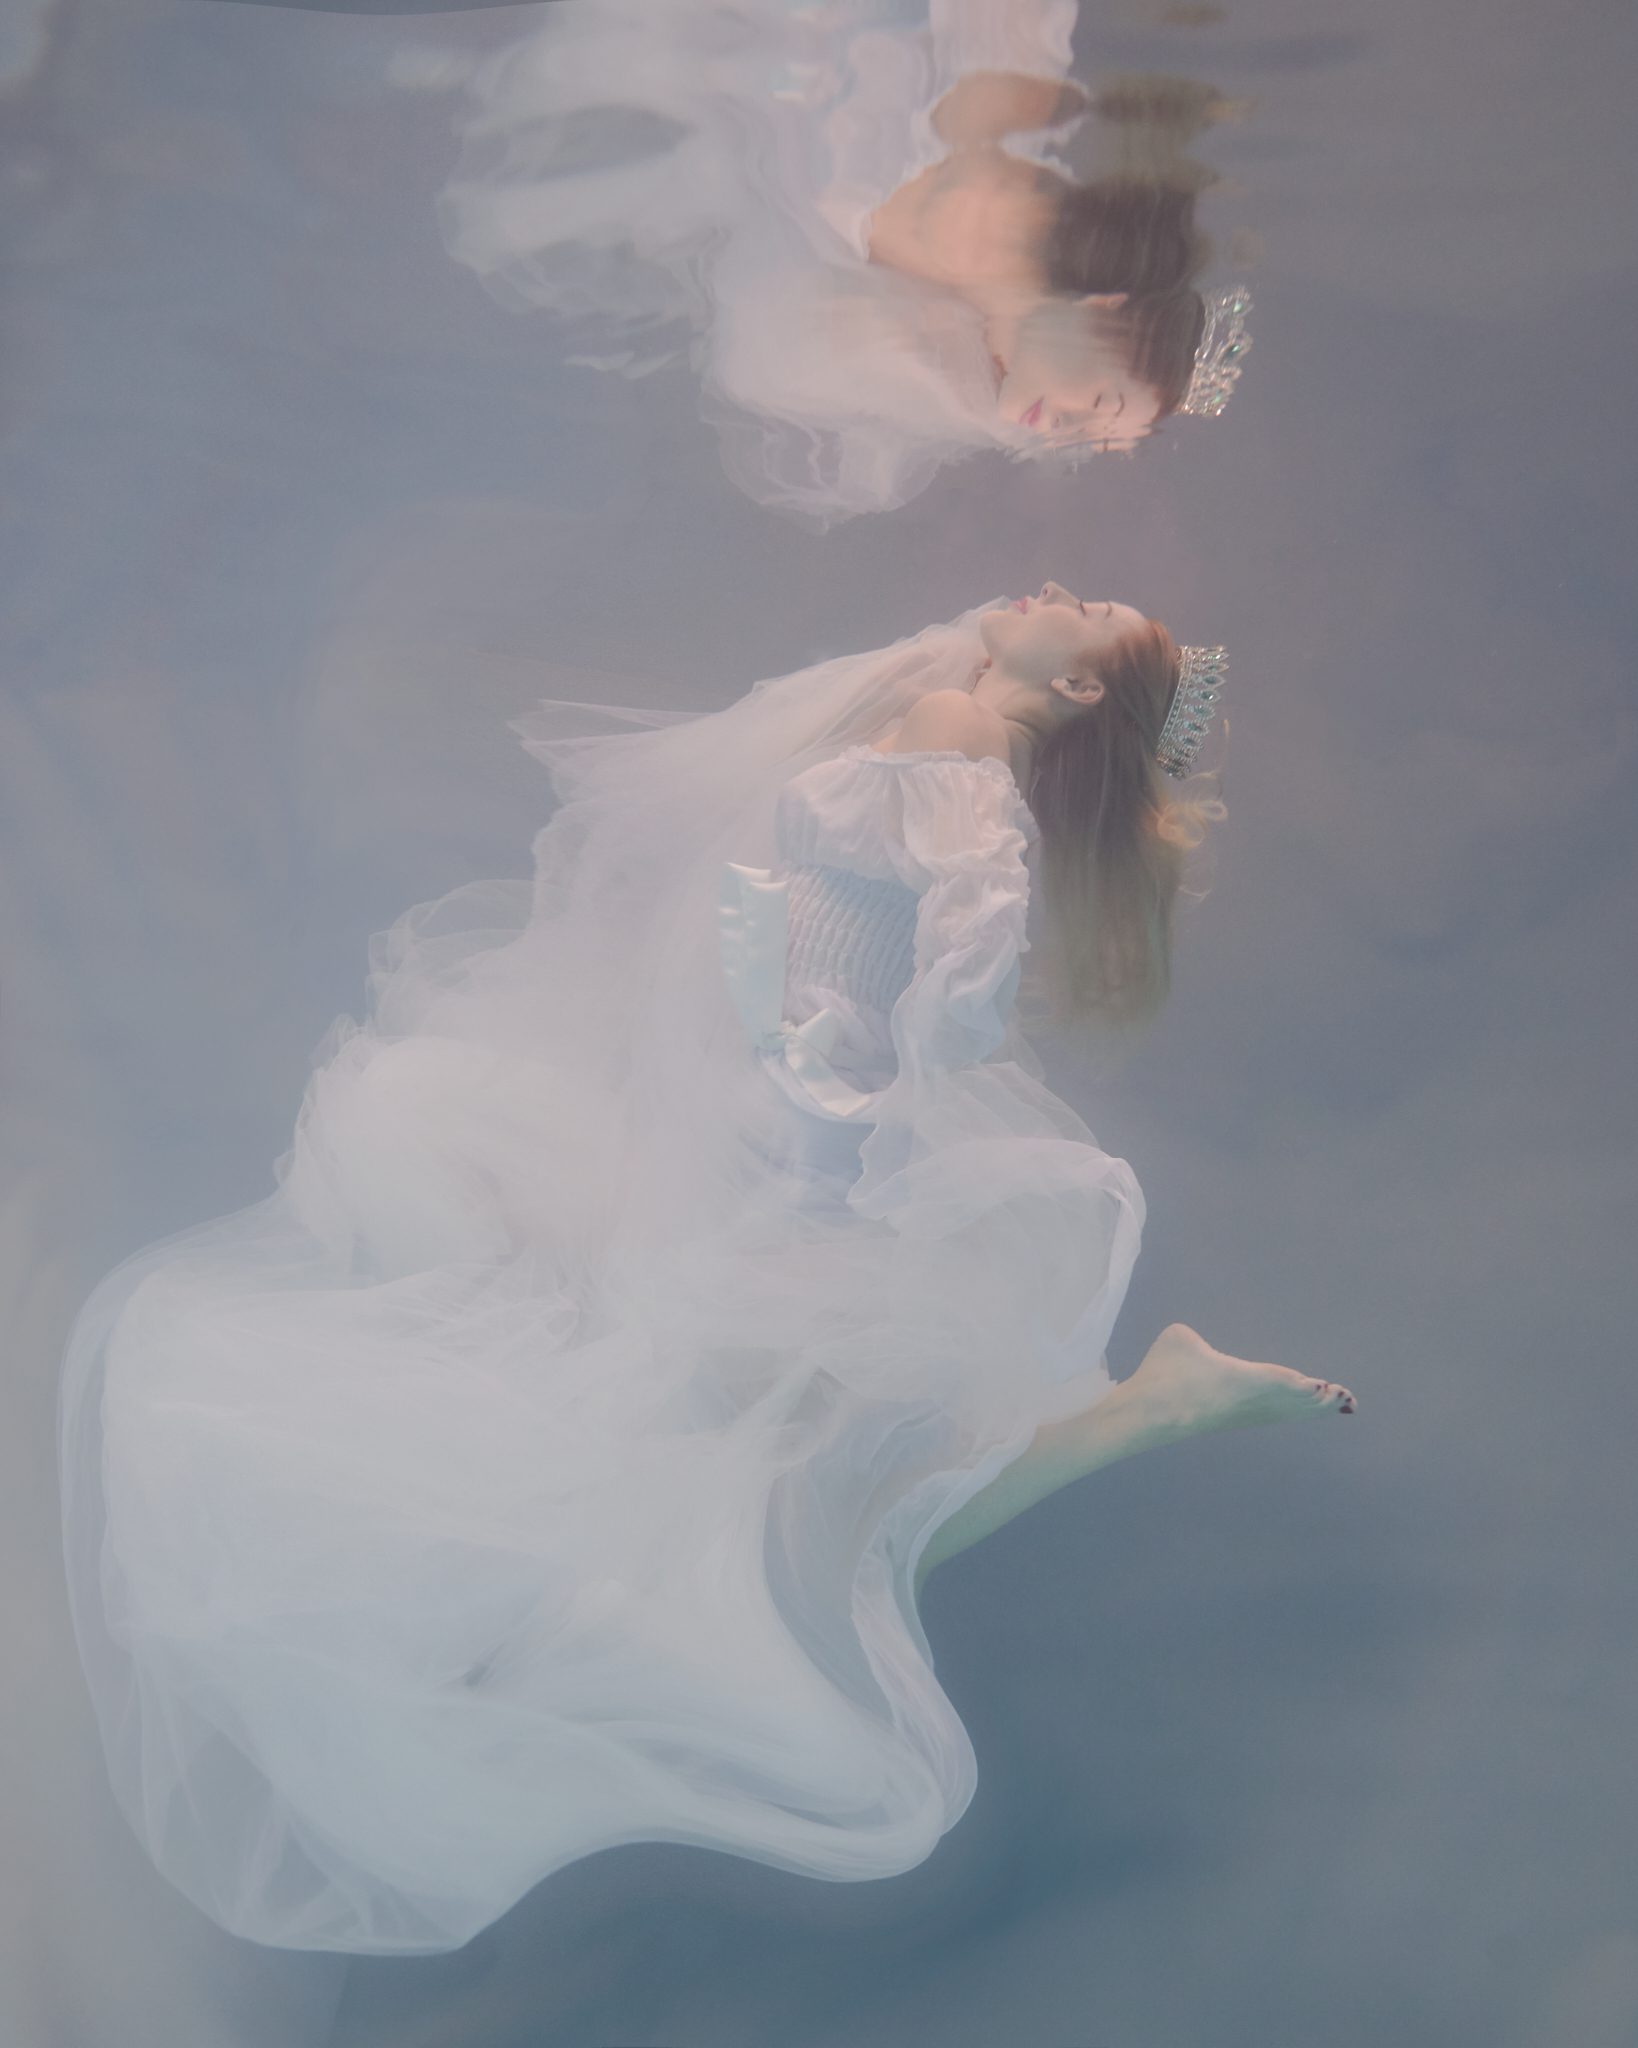 ashley powell, underwater, miss scuba uk, grey background, crown, floating, underwater photoshoot